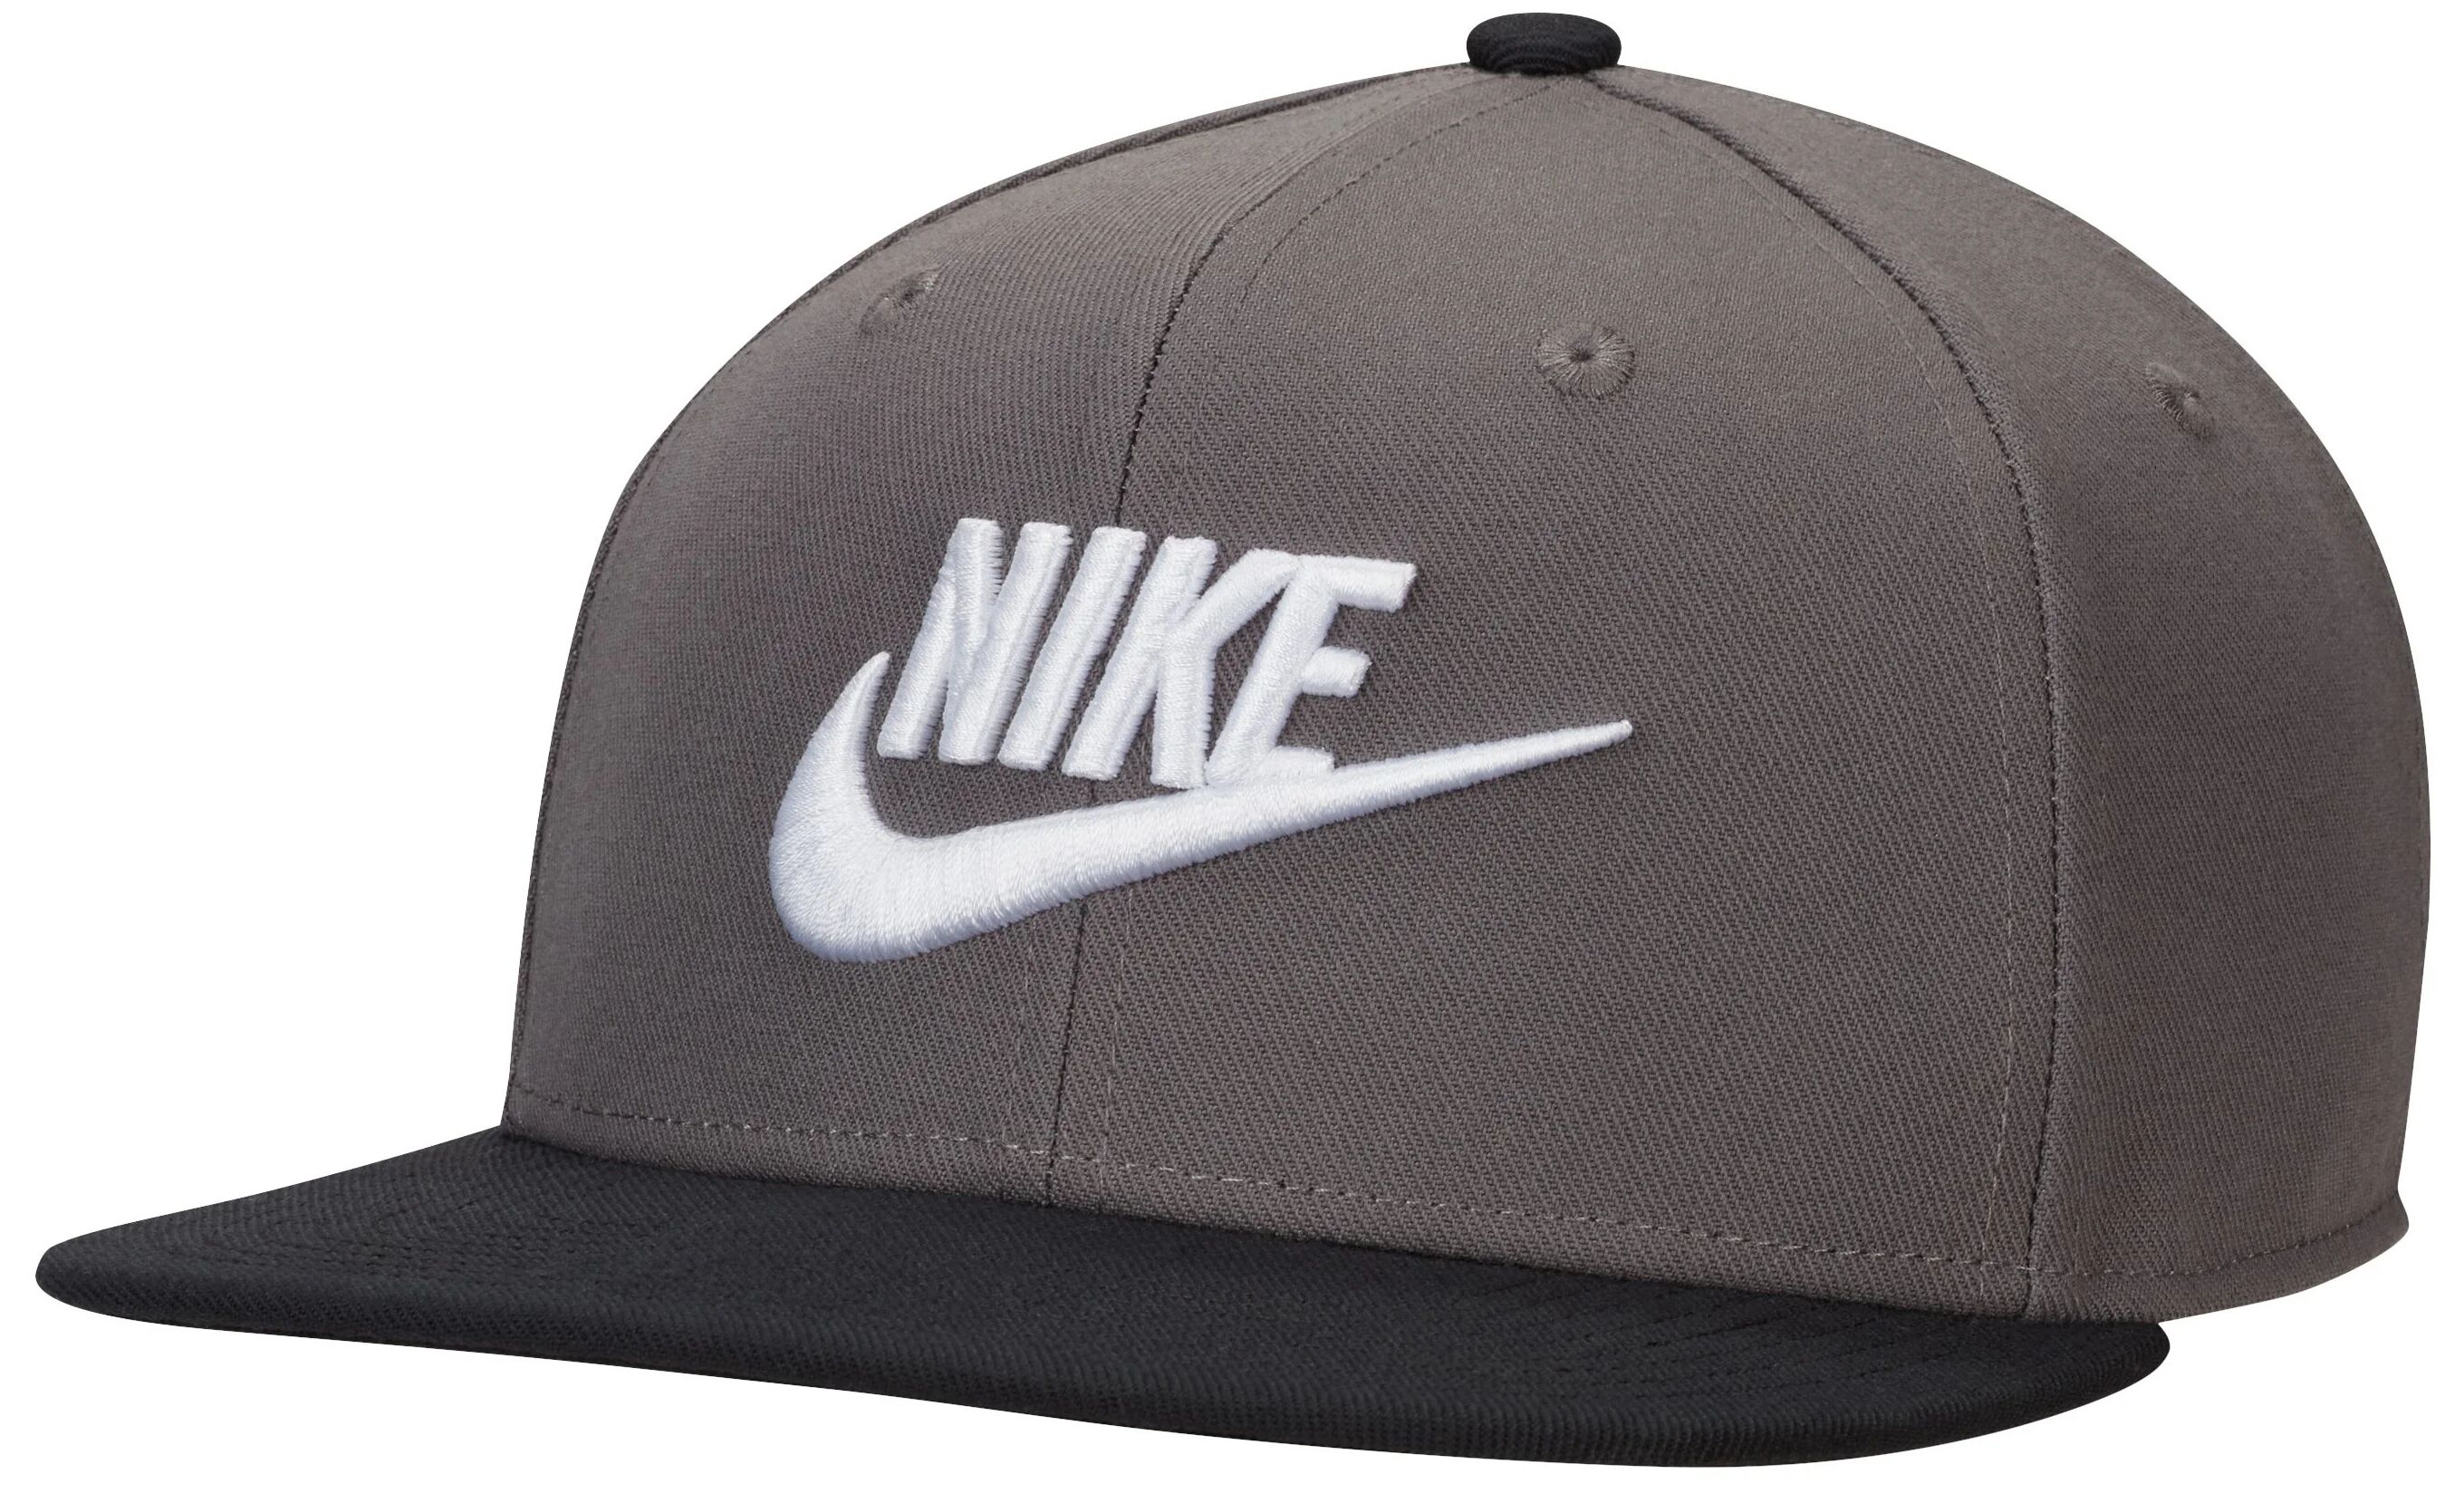 Nike Dri-FIT Pro Structured Futura Men's Golf Hat - Grey, Size: Small/Medium